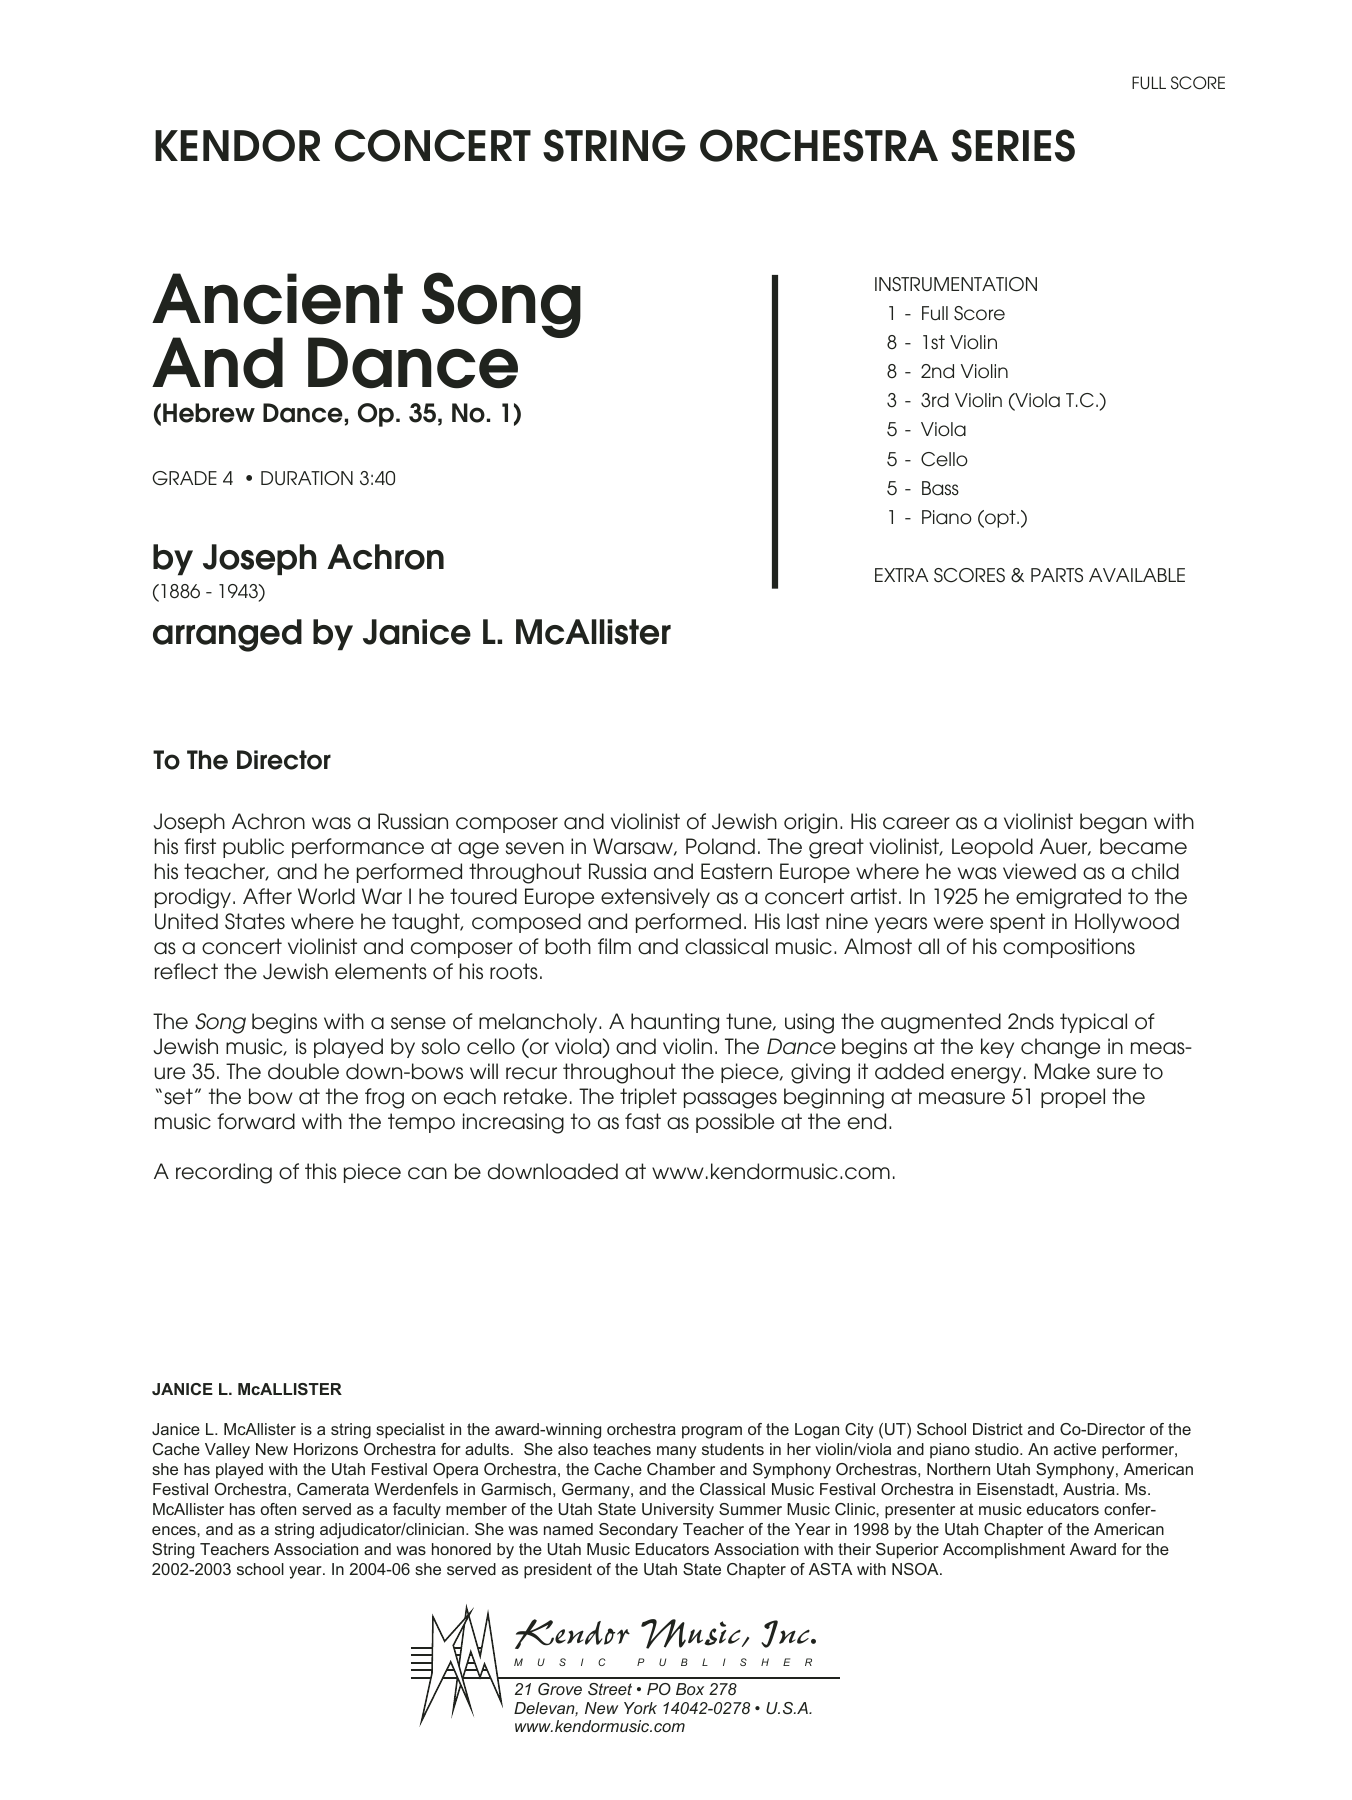 Ancient Song And Dance (Hebrew Dance, Op. 35, No. 1) - Full Score sheet music